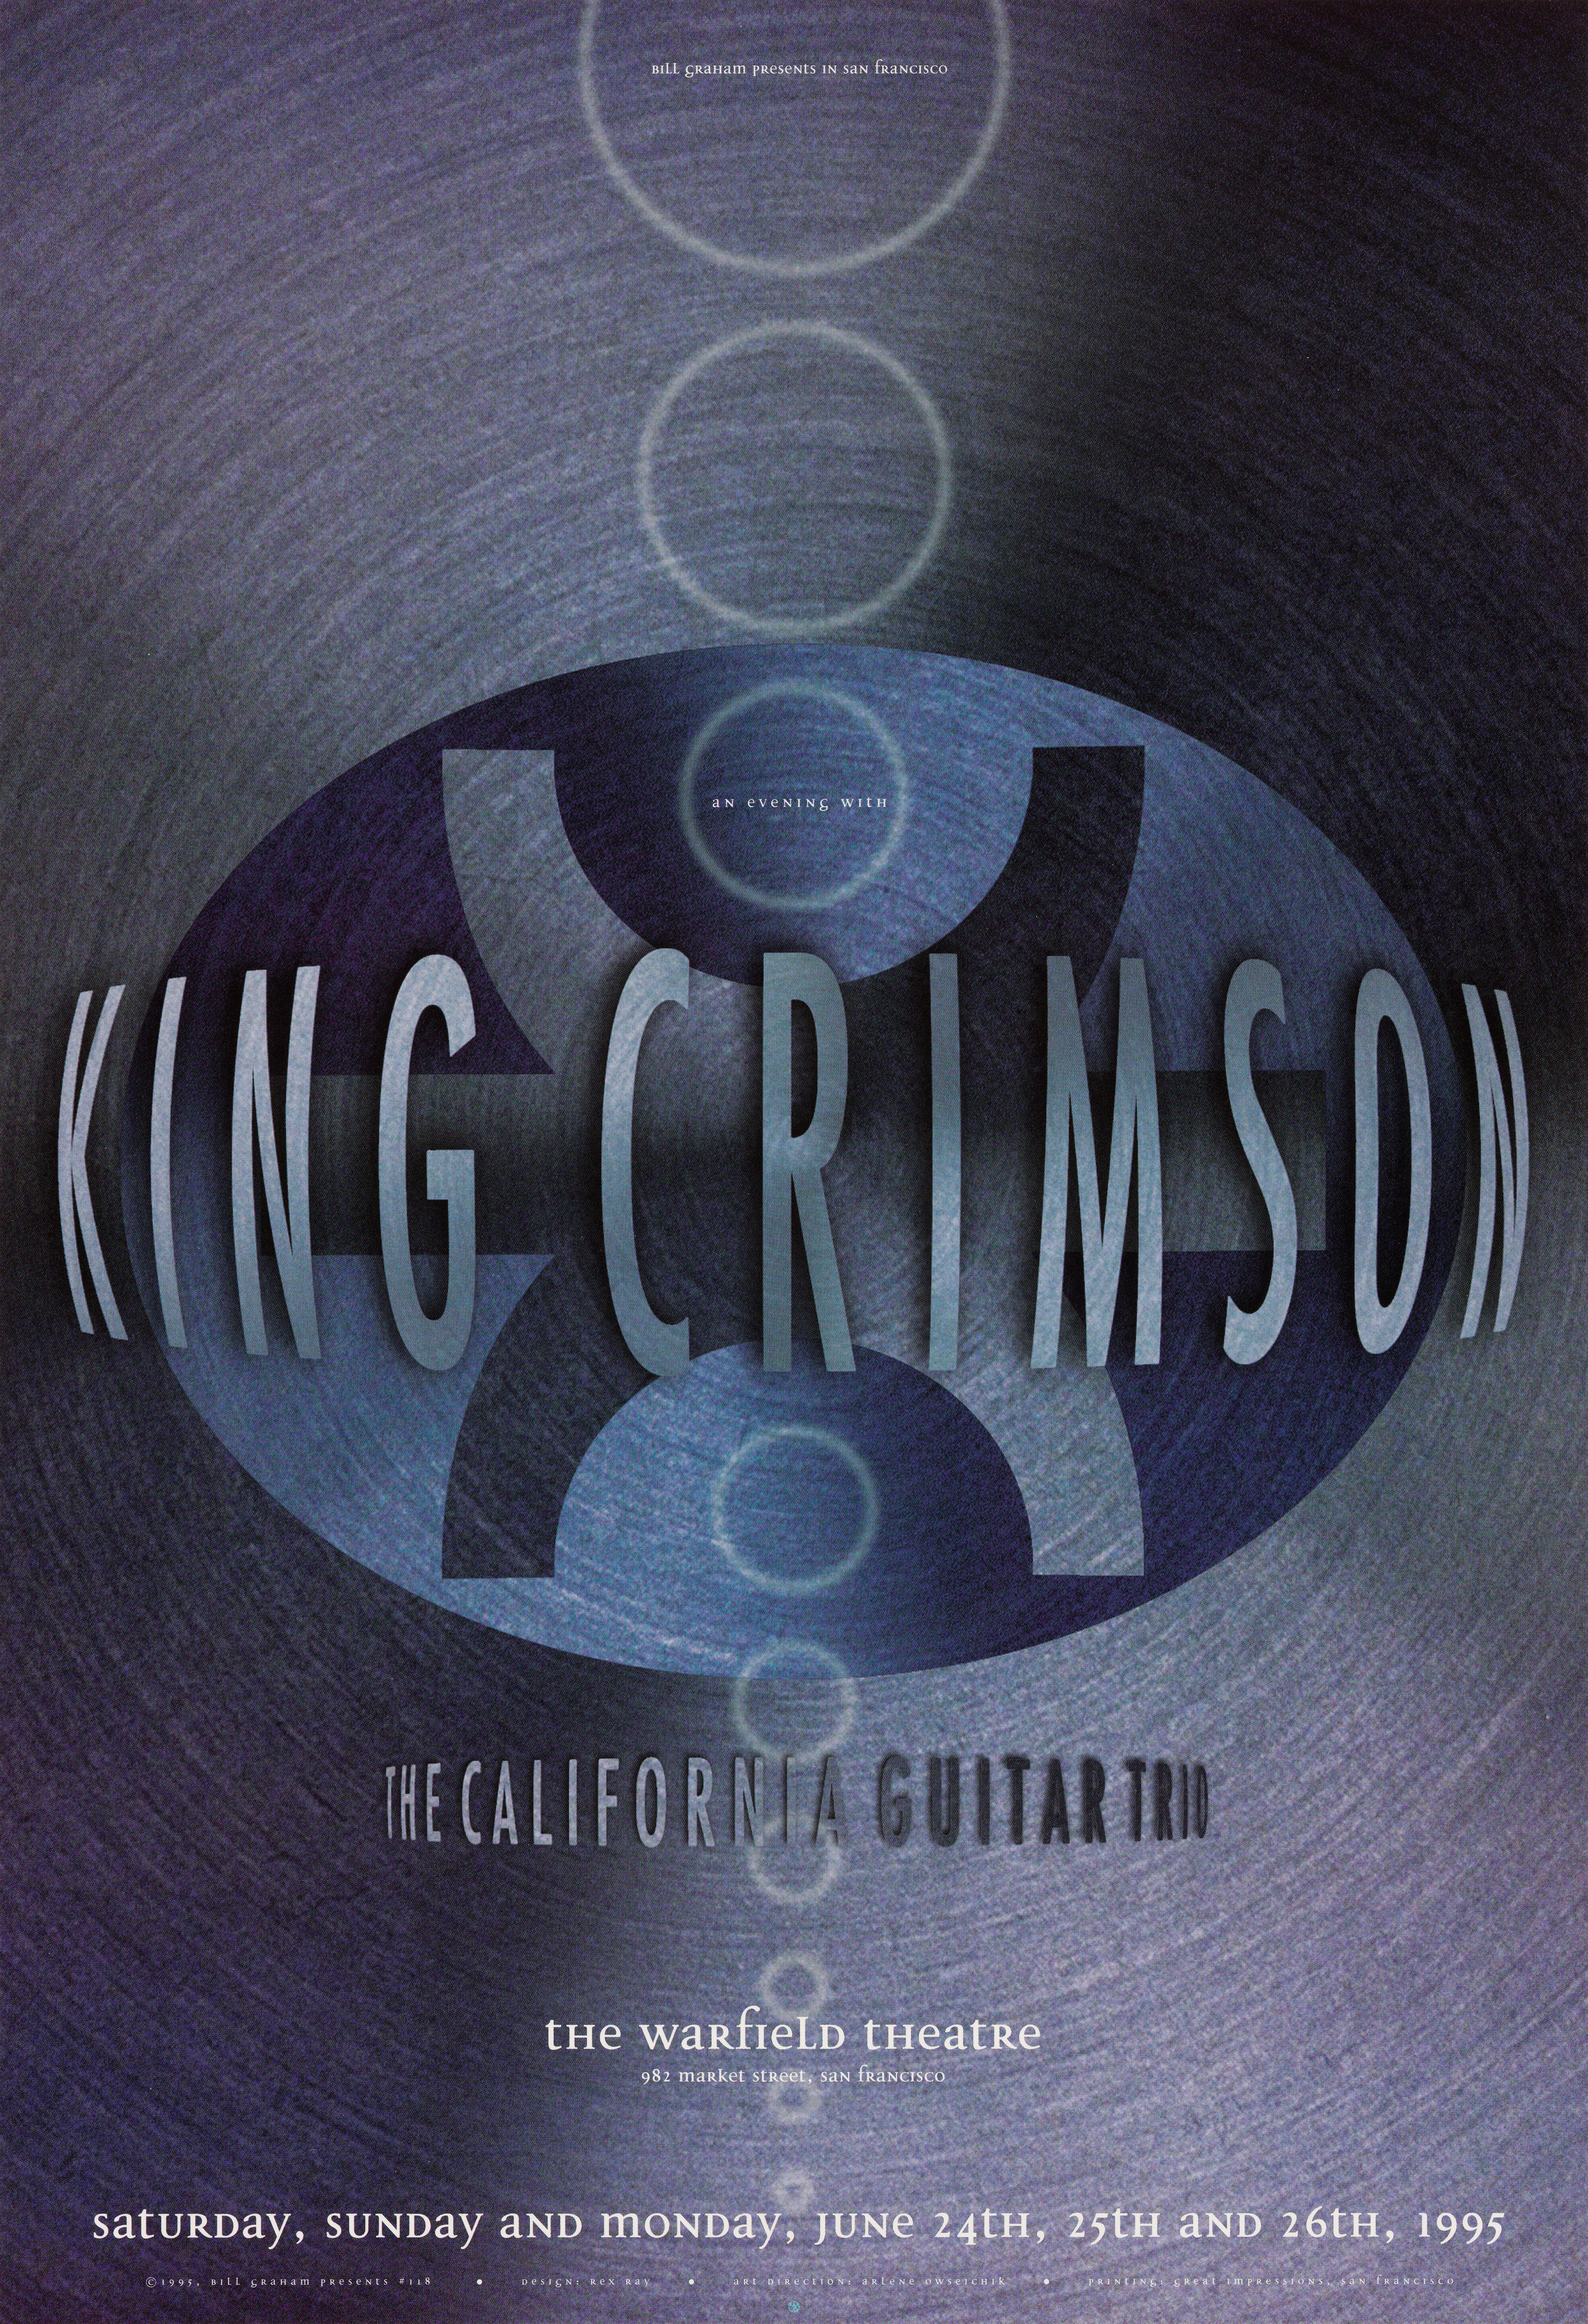 King Crimson, The California Guitar Trio; The Warfield, San Francisco; June 24-26, 1995